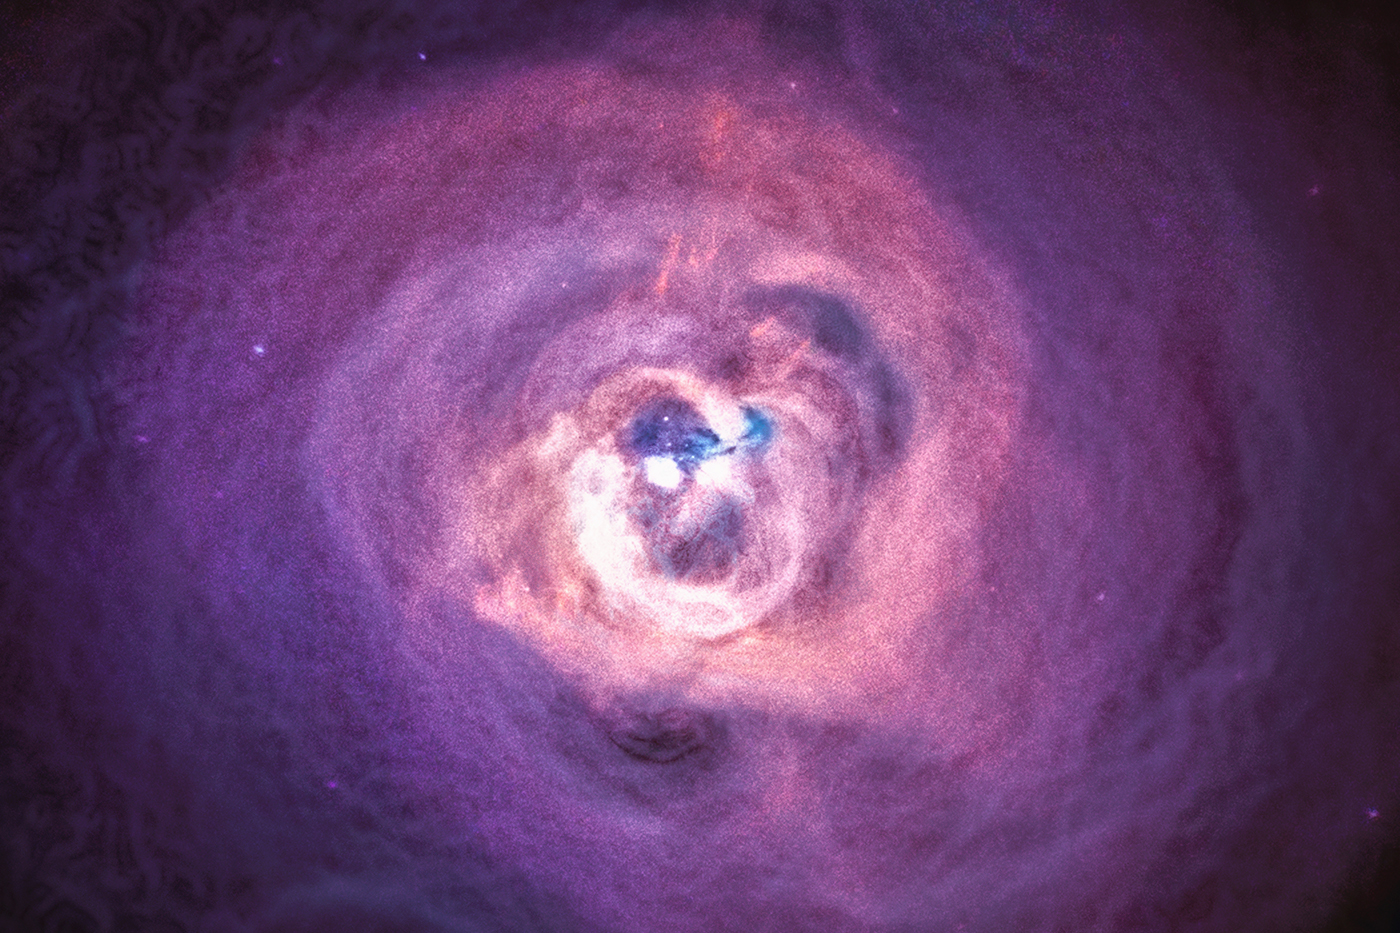 A photo by NASA of a black hole